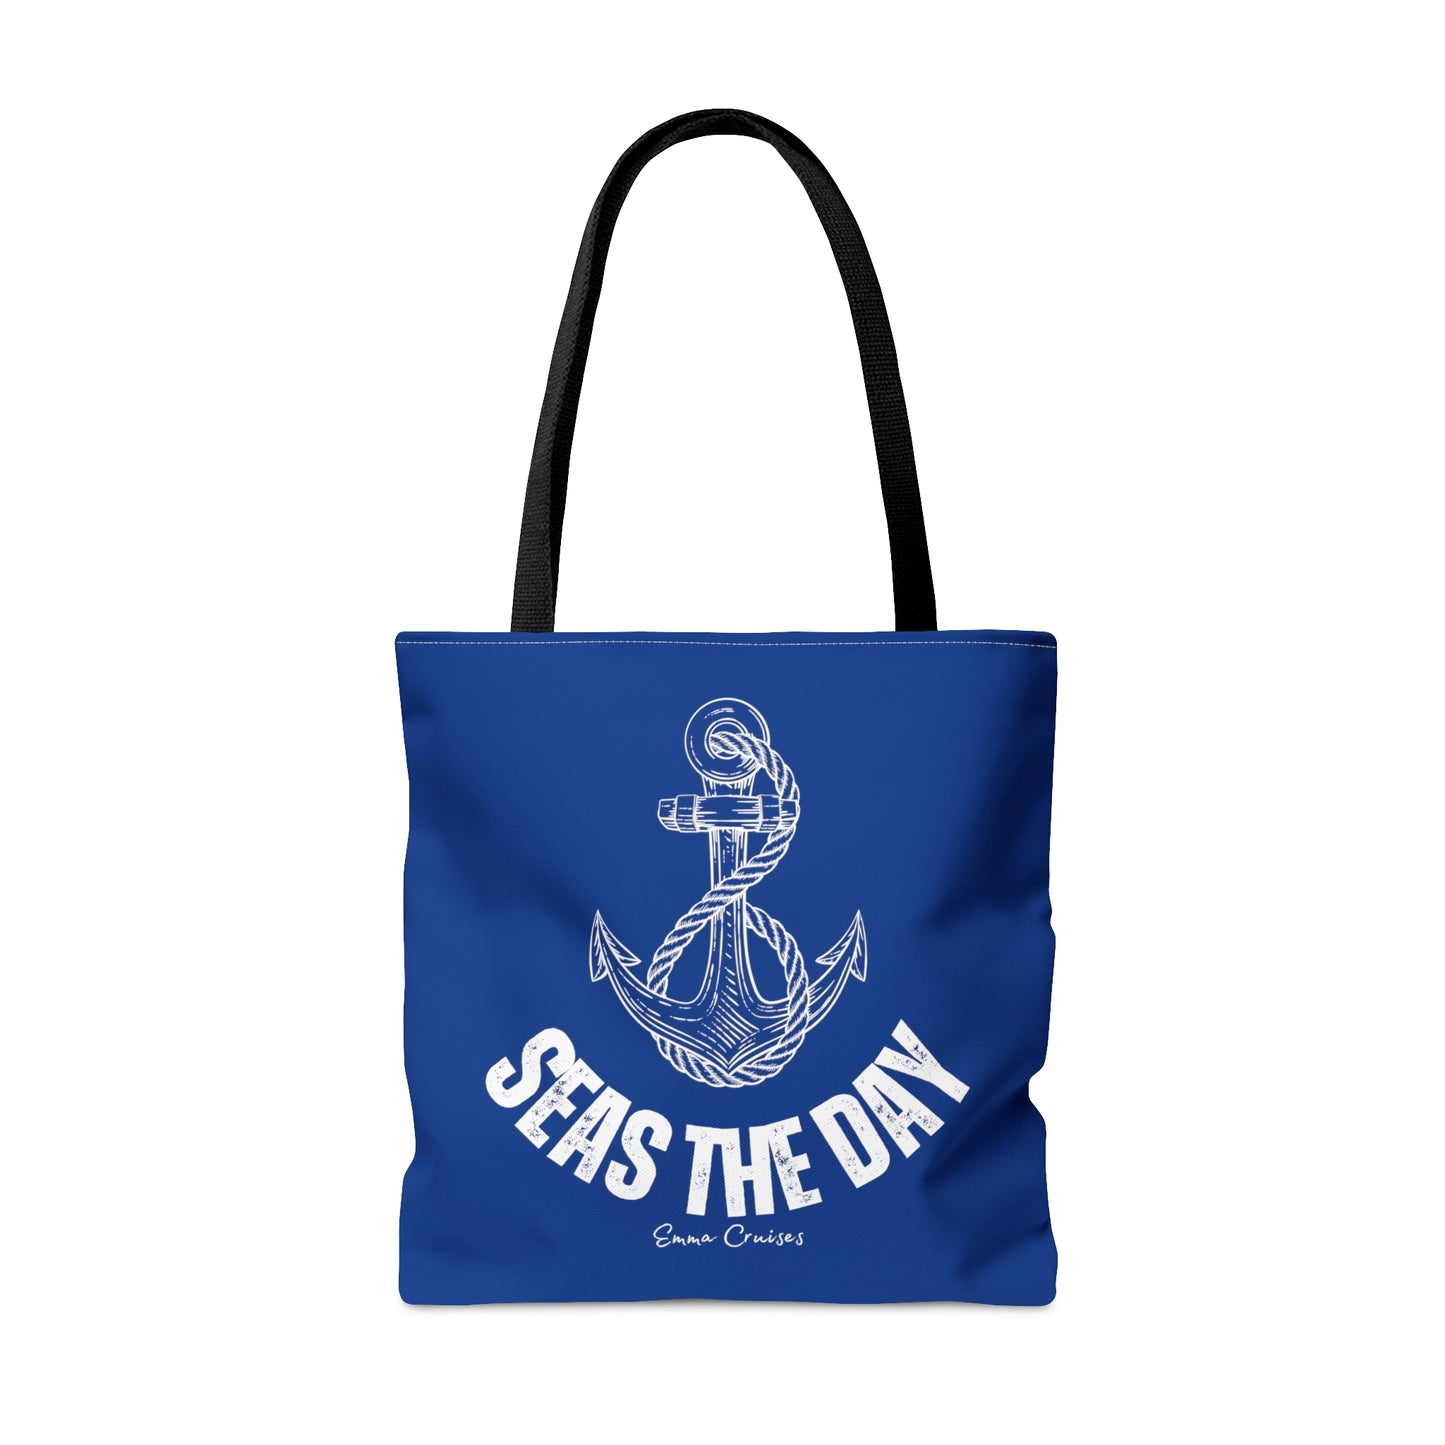 Seas the Day - Bag